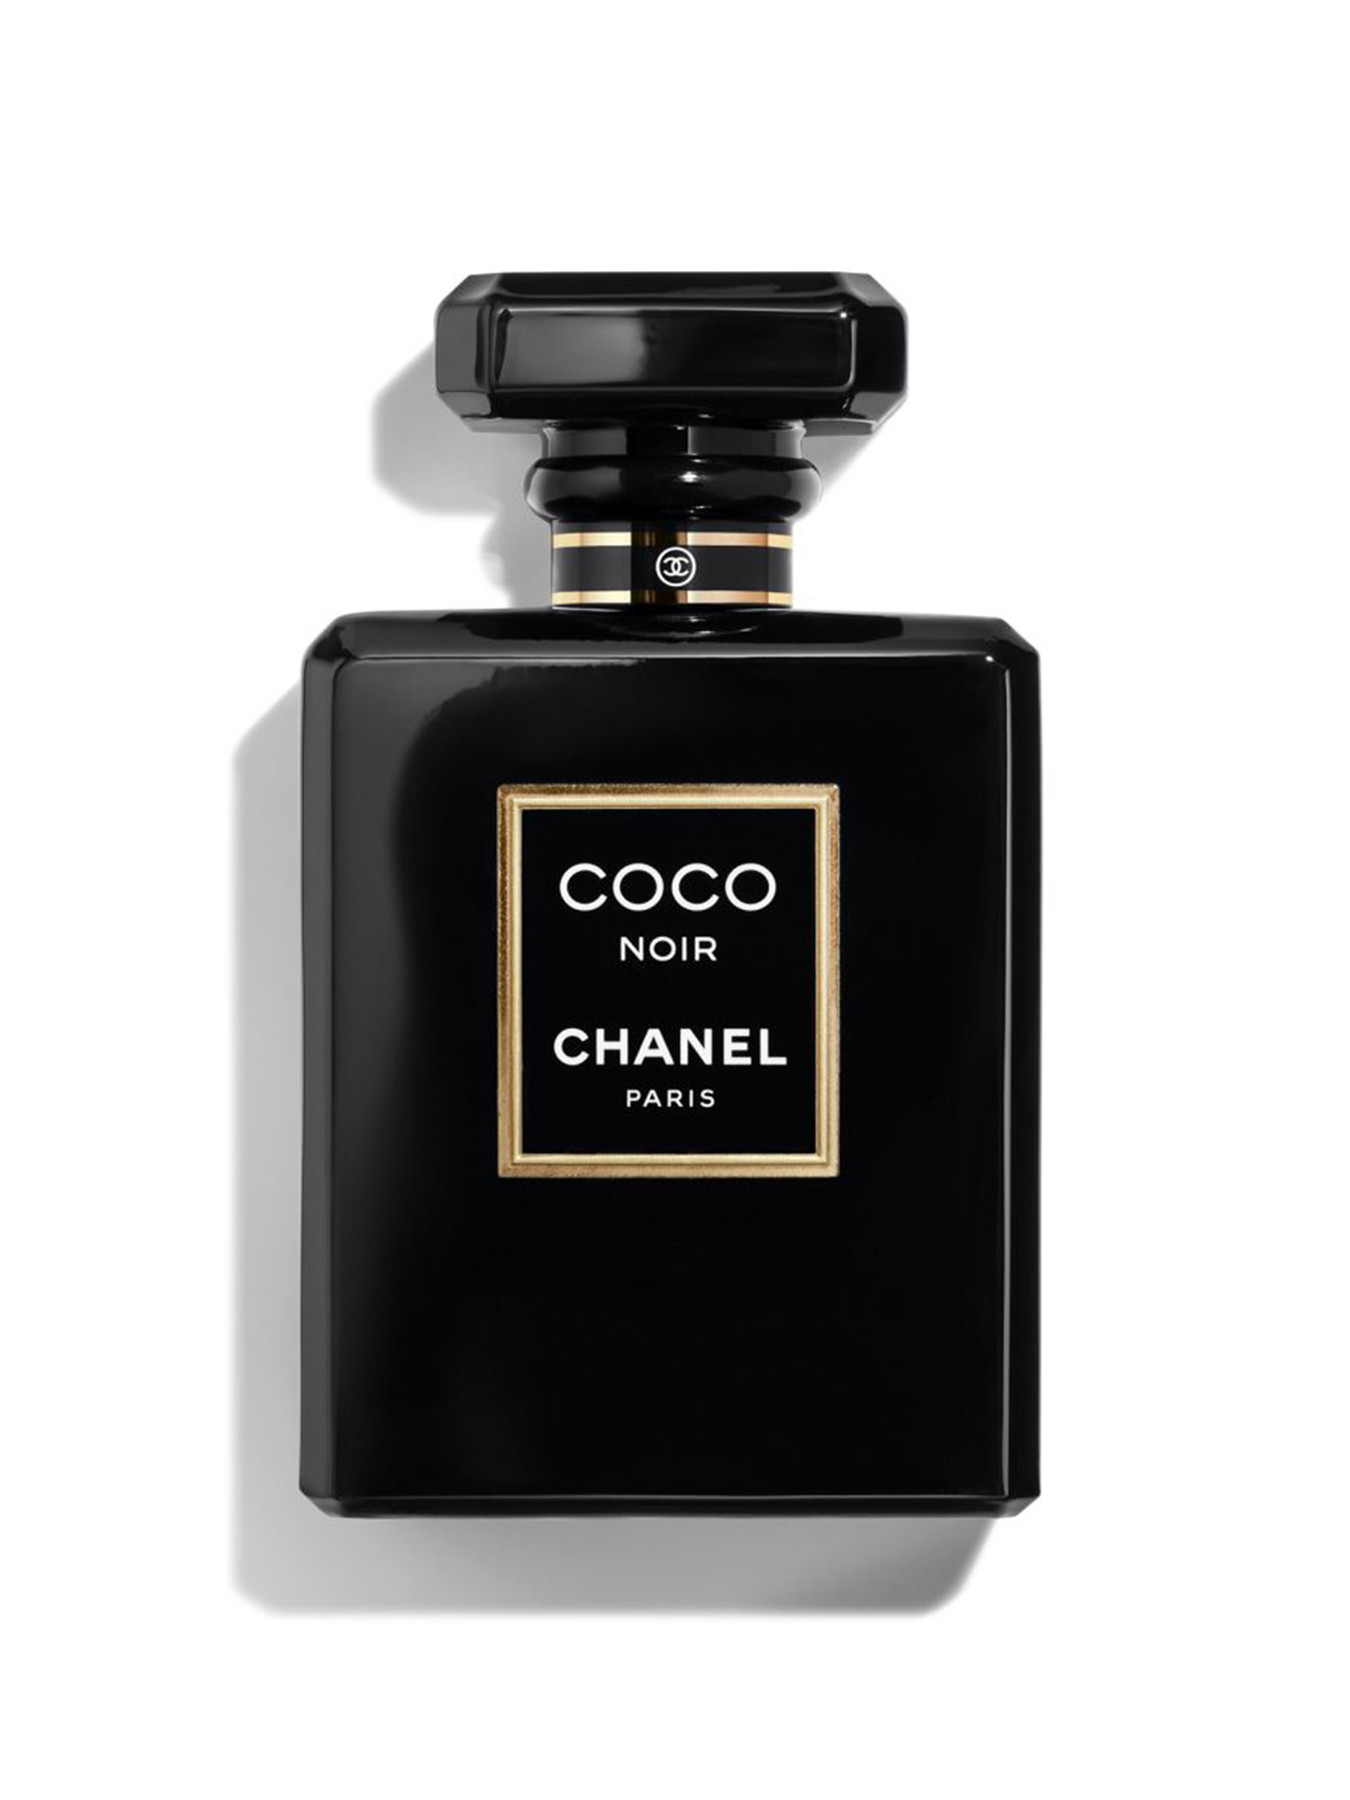 Coco Noir Eau De Parfum Spray 100ml - Chanel